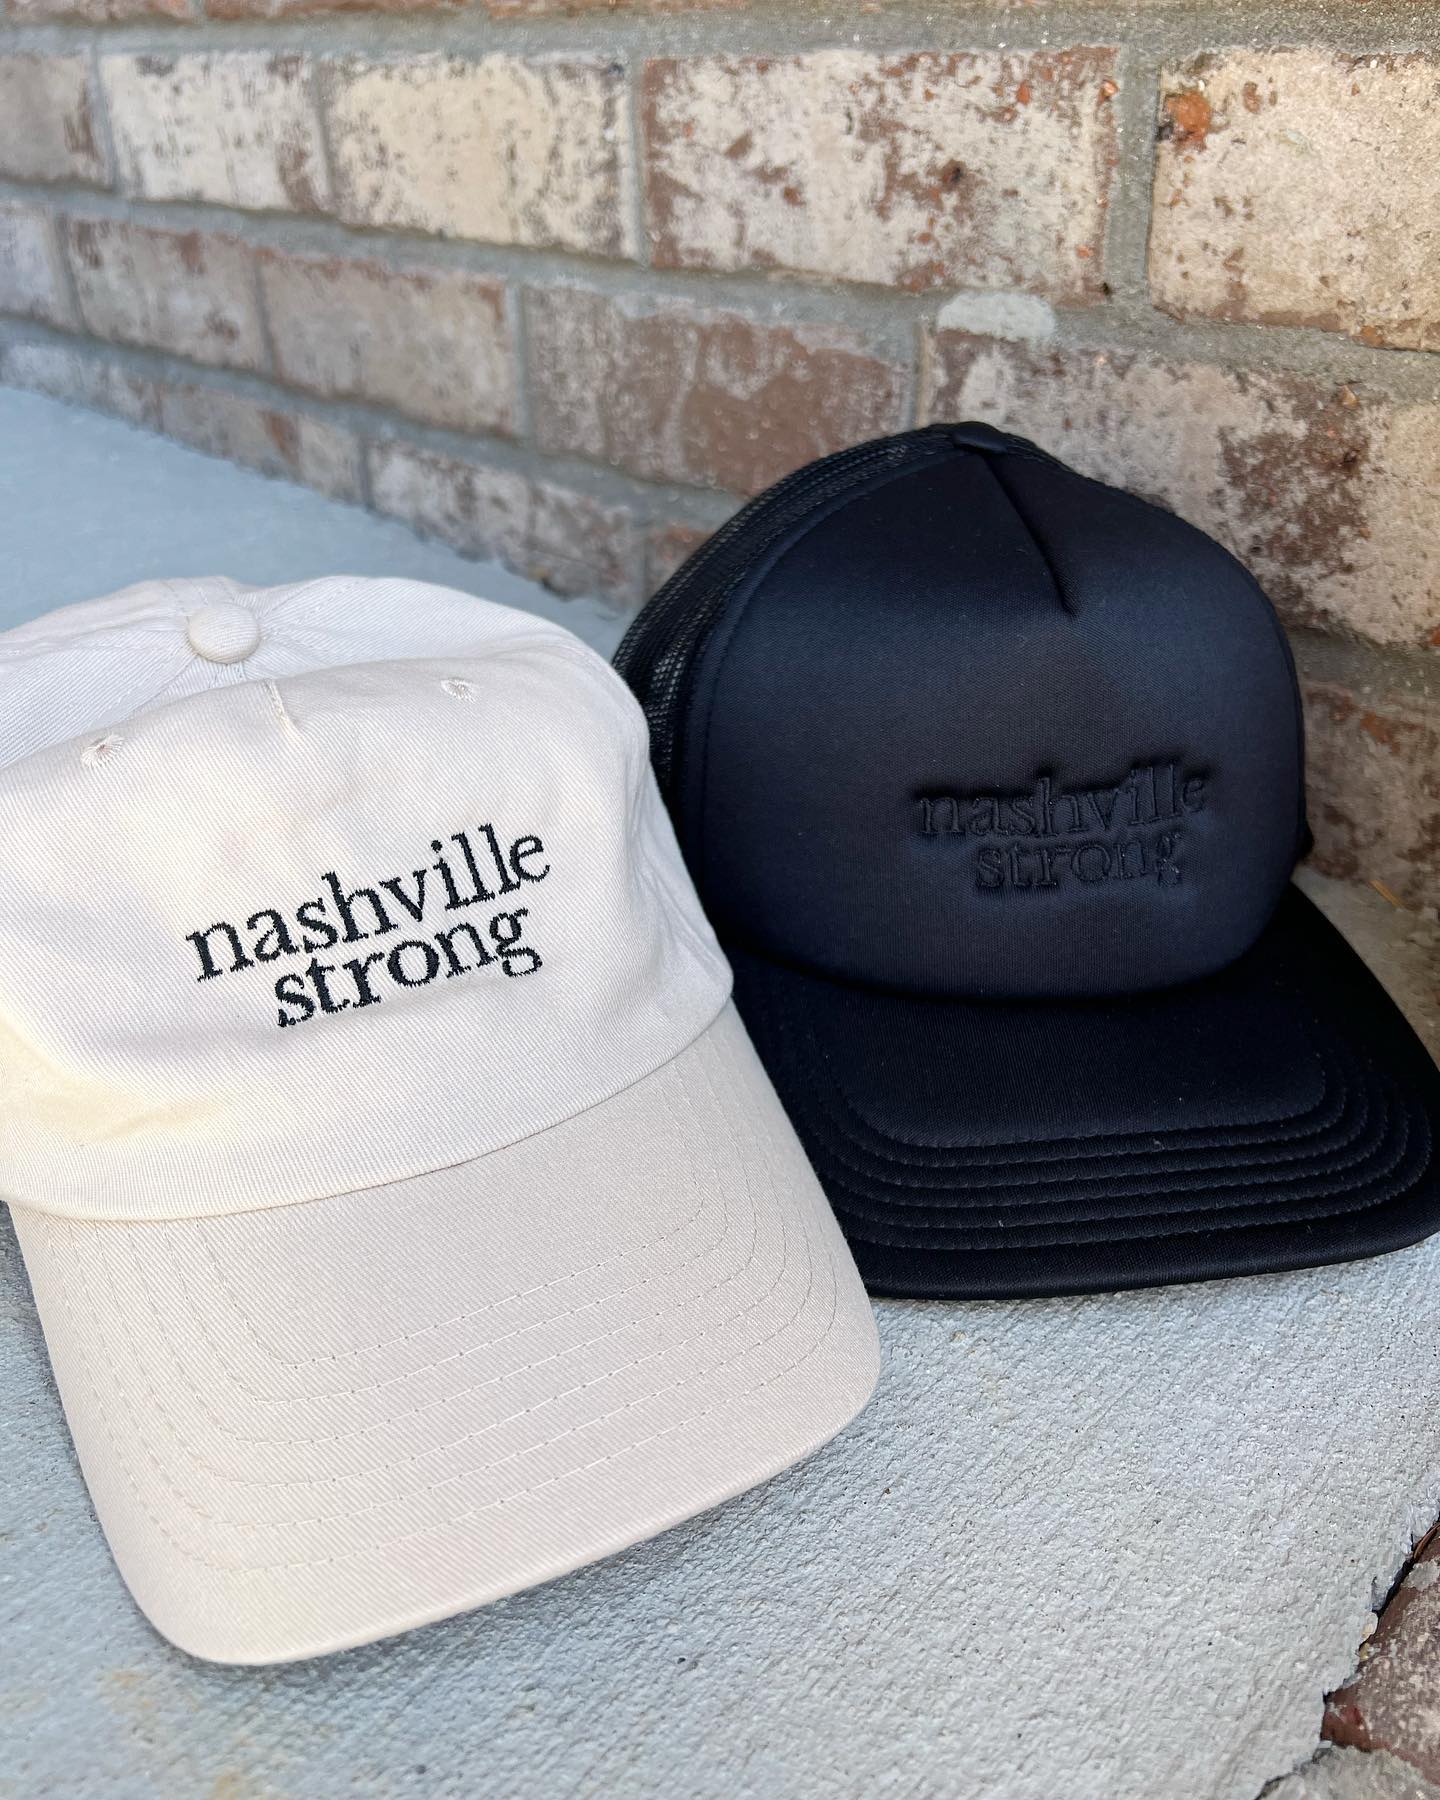 Nashville Strong Cap